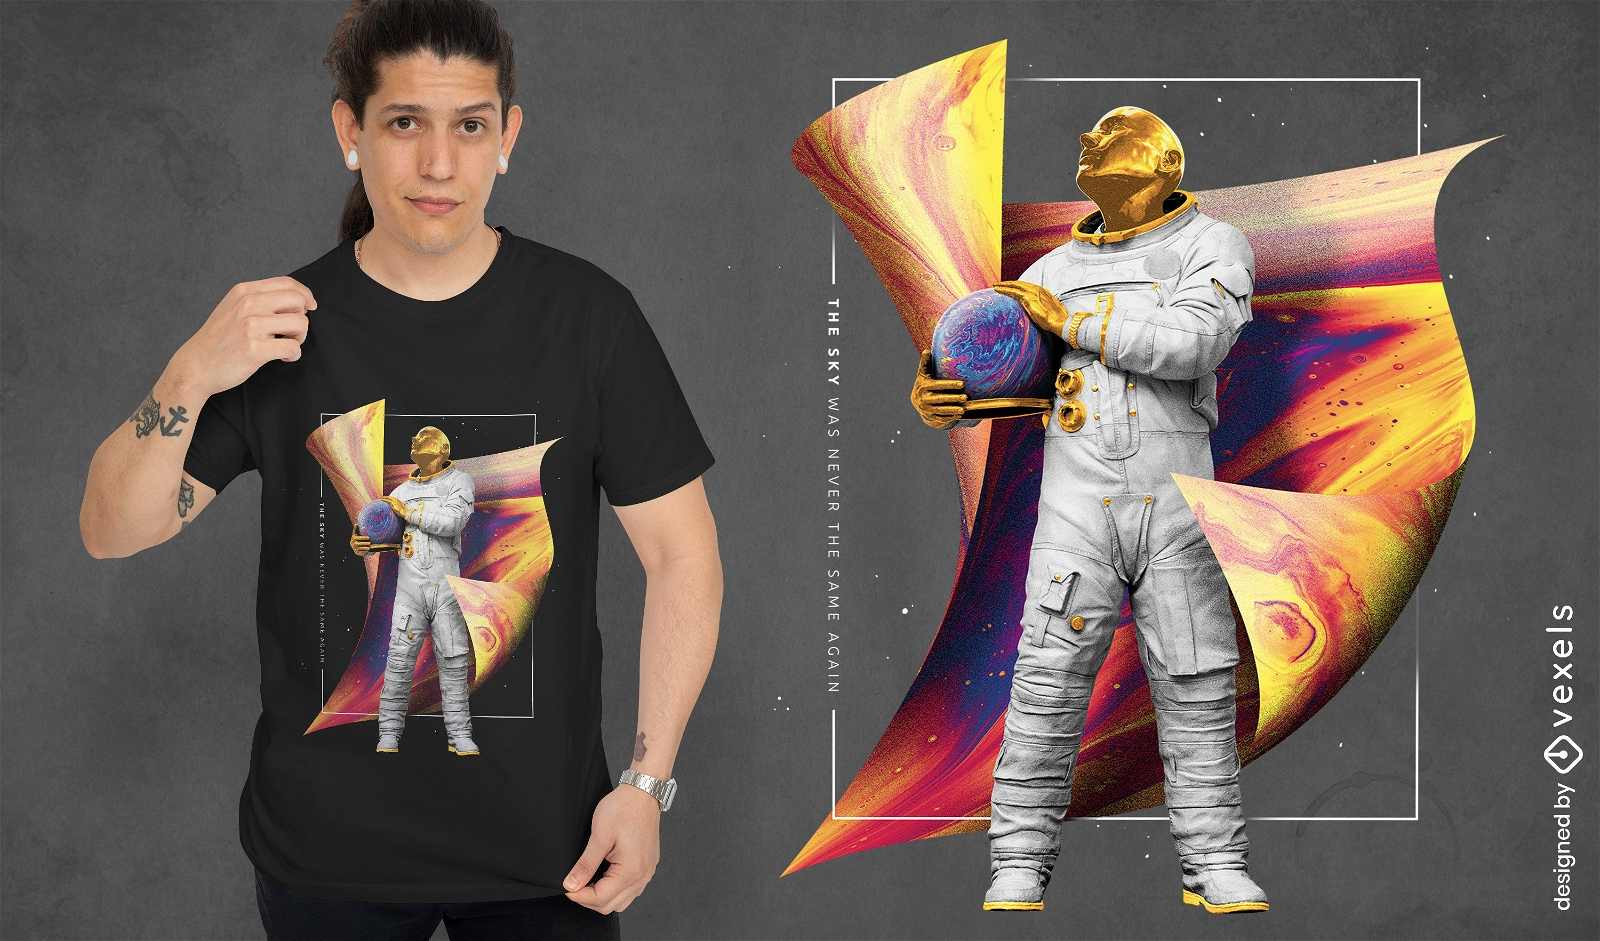 Dise?o de camiseta psd de espacio dorado de astronauta